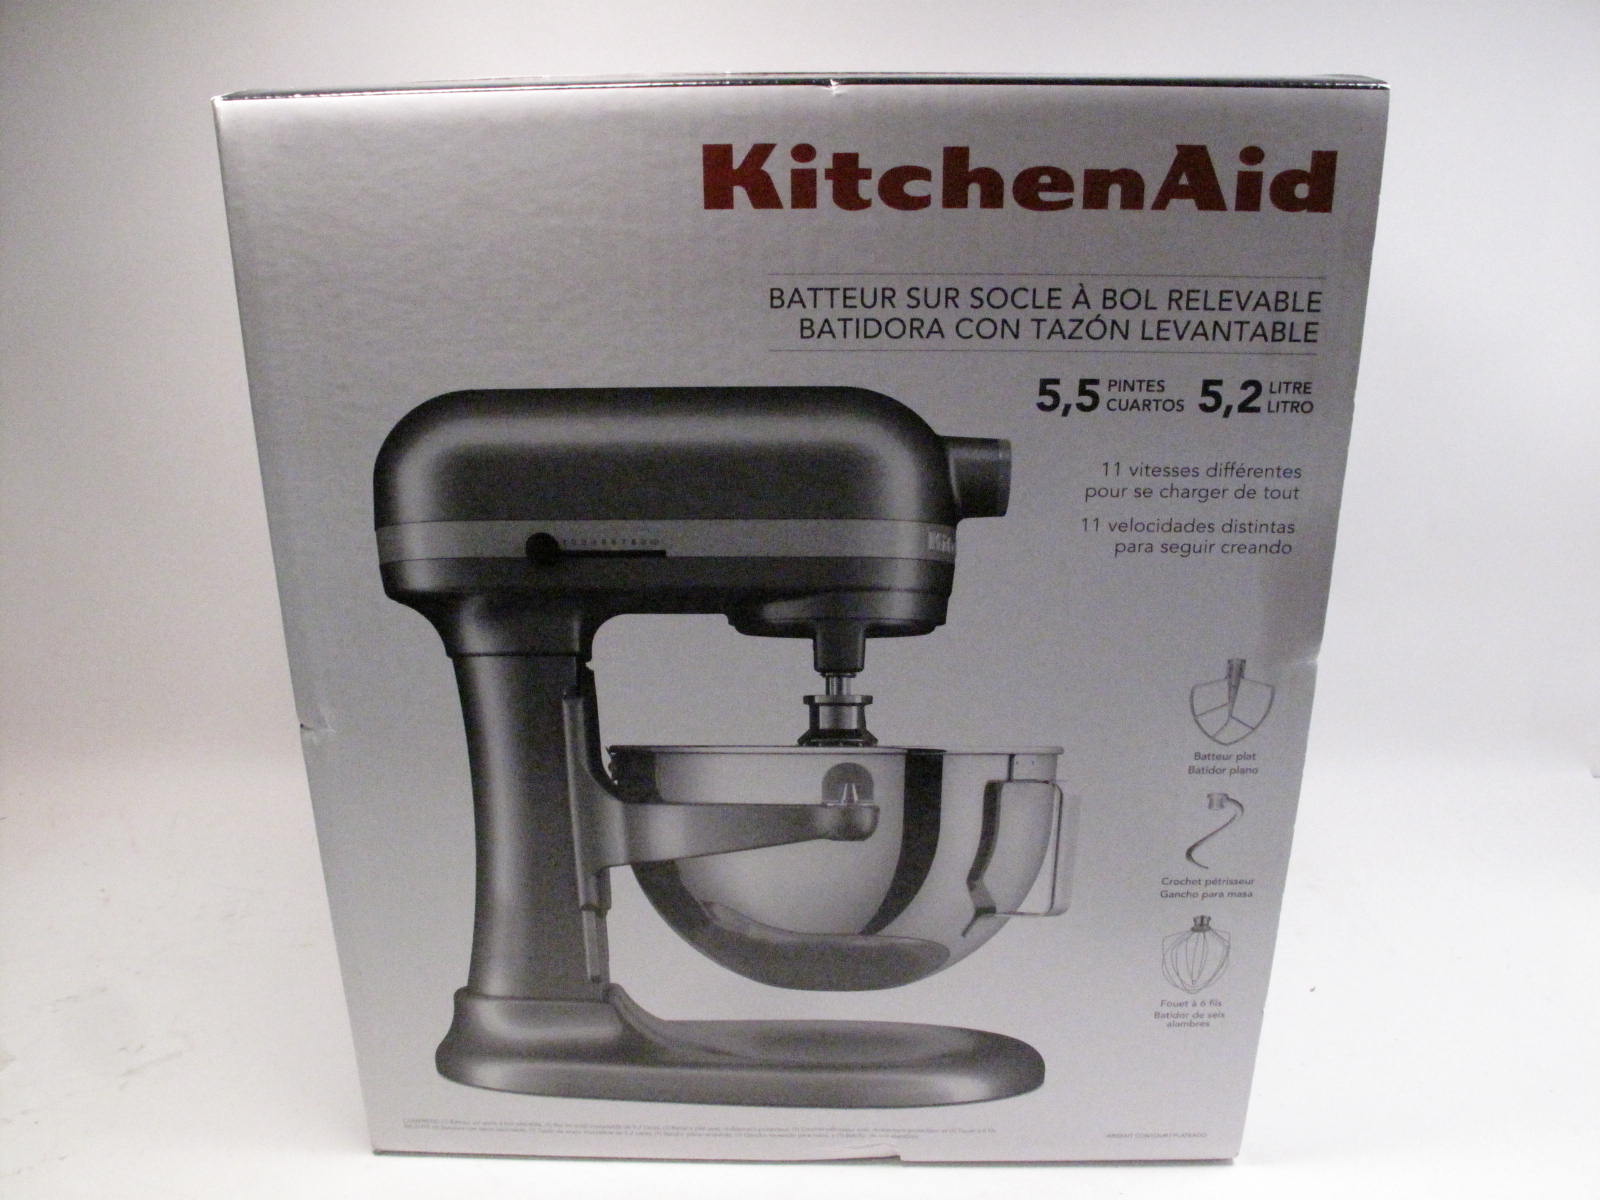 KitchenAid - 5.5 Quart Bowl-Lift Stand Mixer - Contour Silver